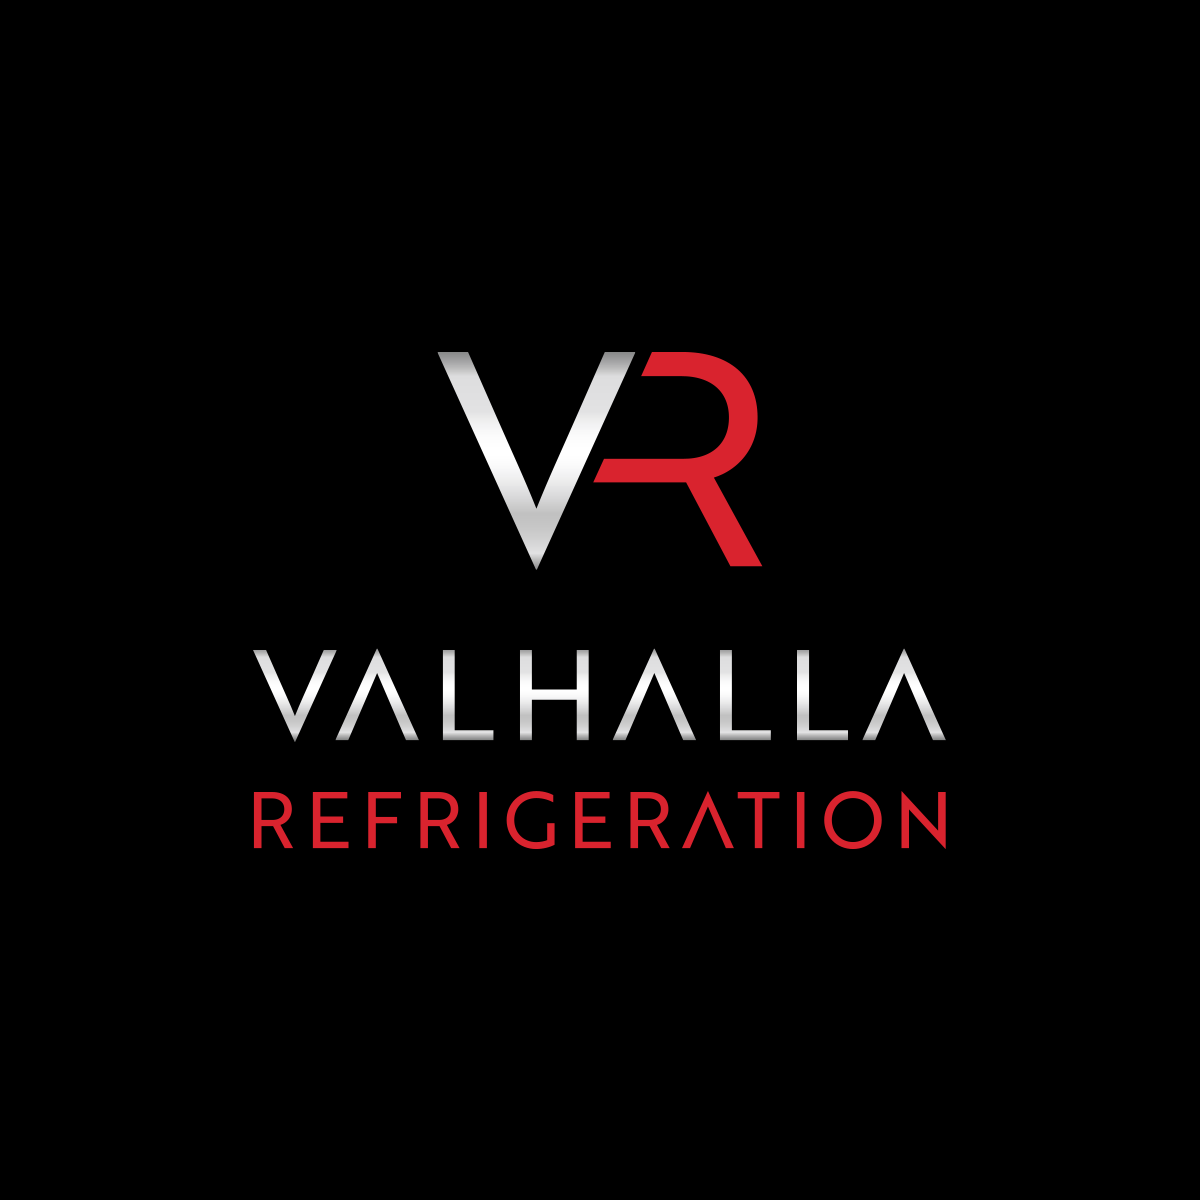 Logo design and brand identity, graphic design, web design and printing for Valhalla Refrigeration in Castlegar BC